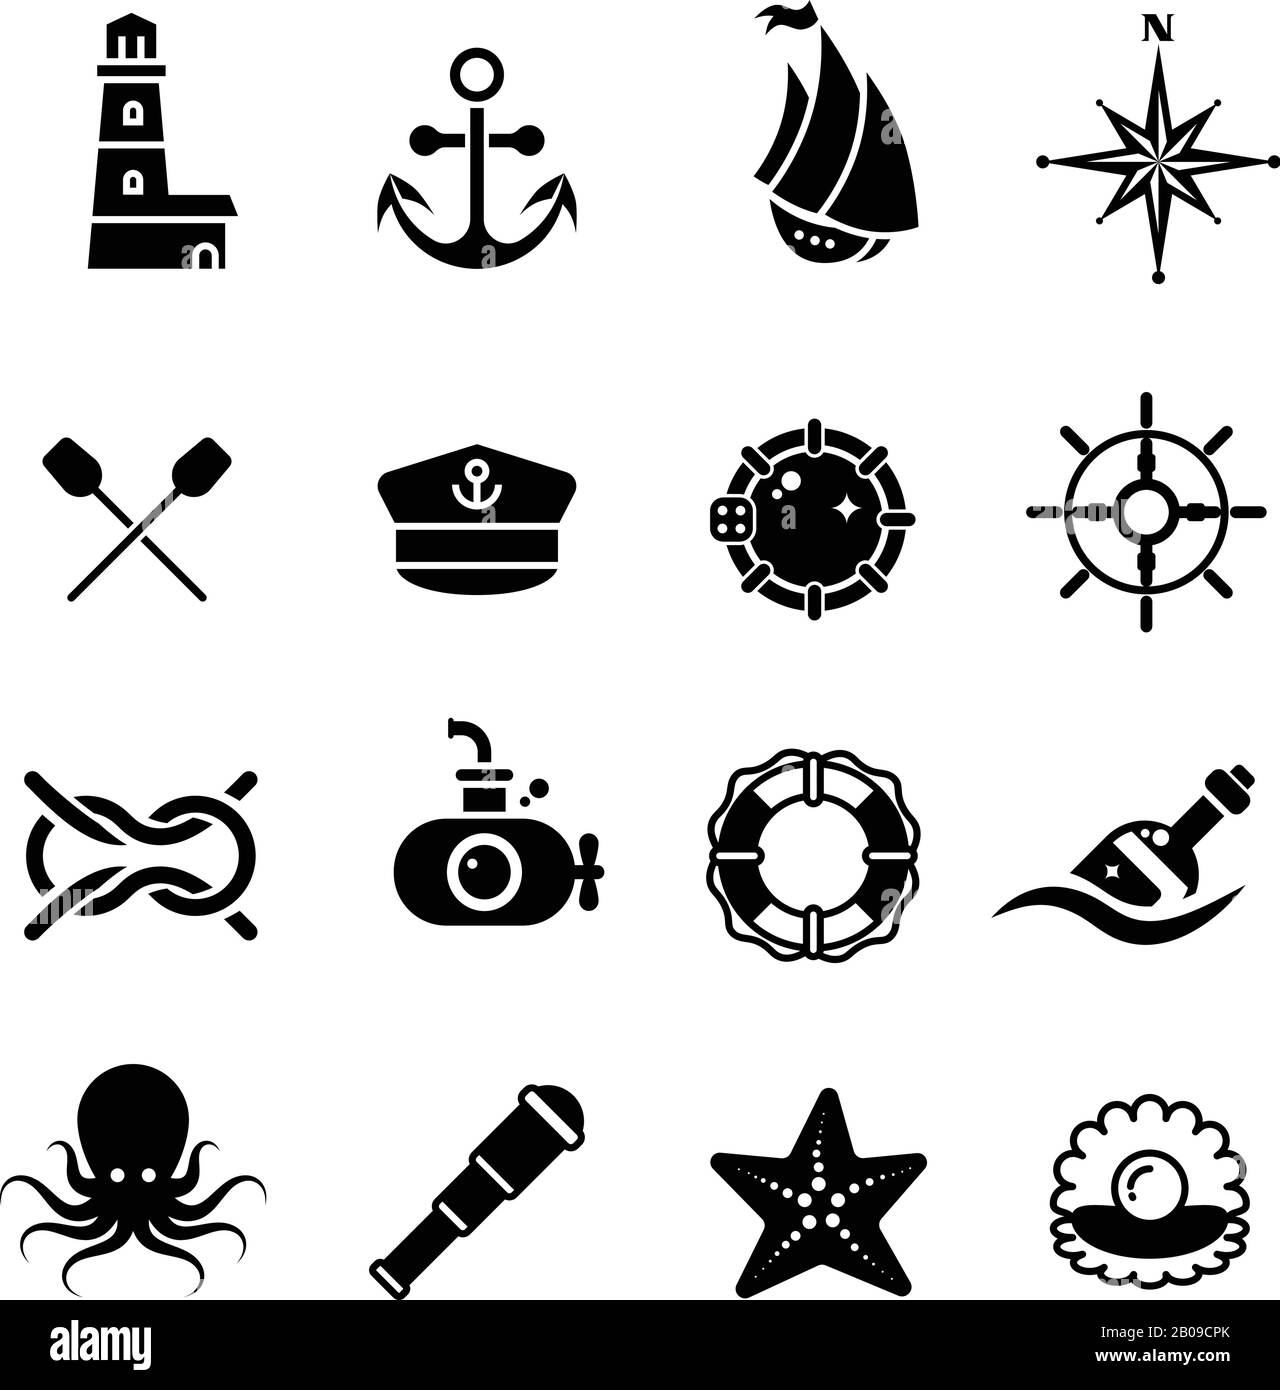 Marine, mer, nautique, pirate, vecteur maritime rétro icônes. Illustration des symboles marins noir et blanc Illustration de Vecteur